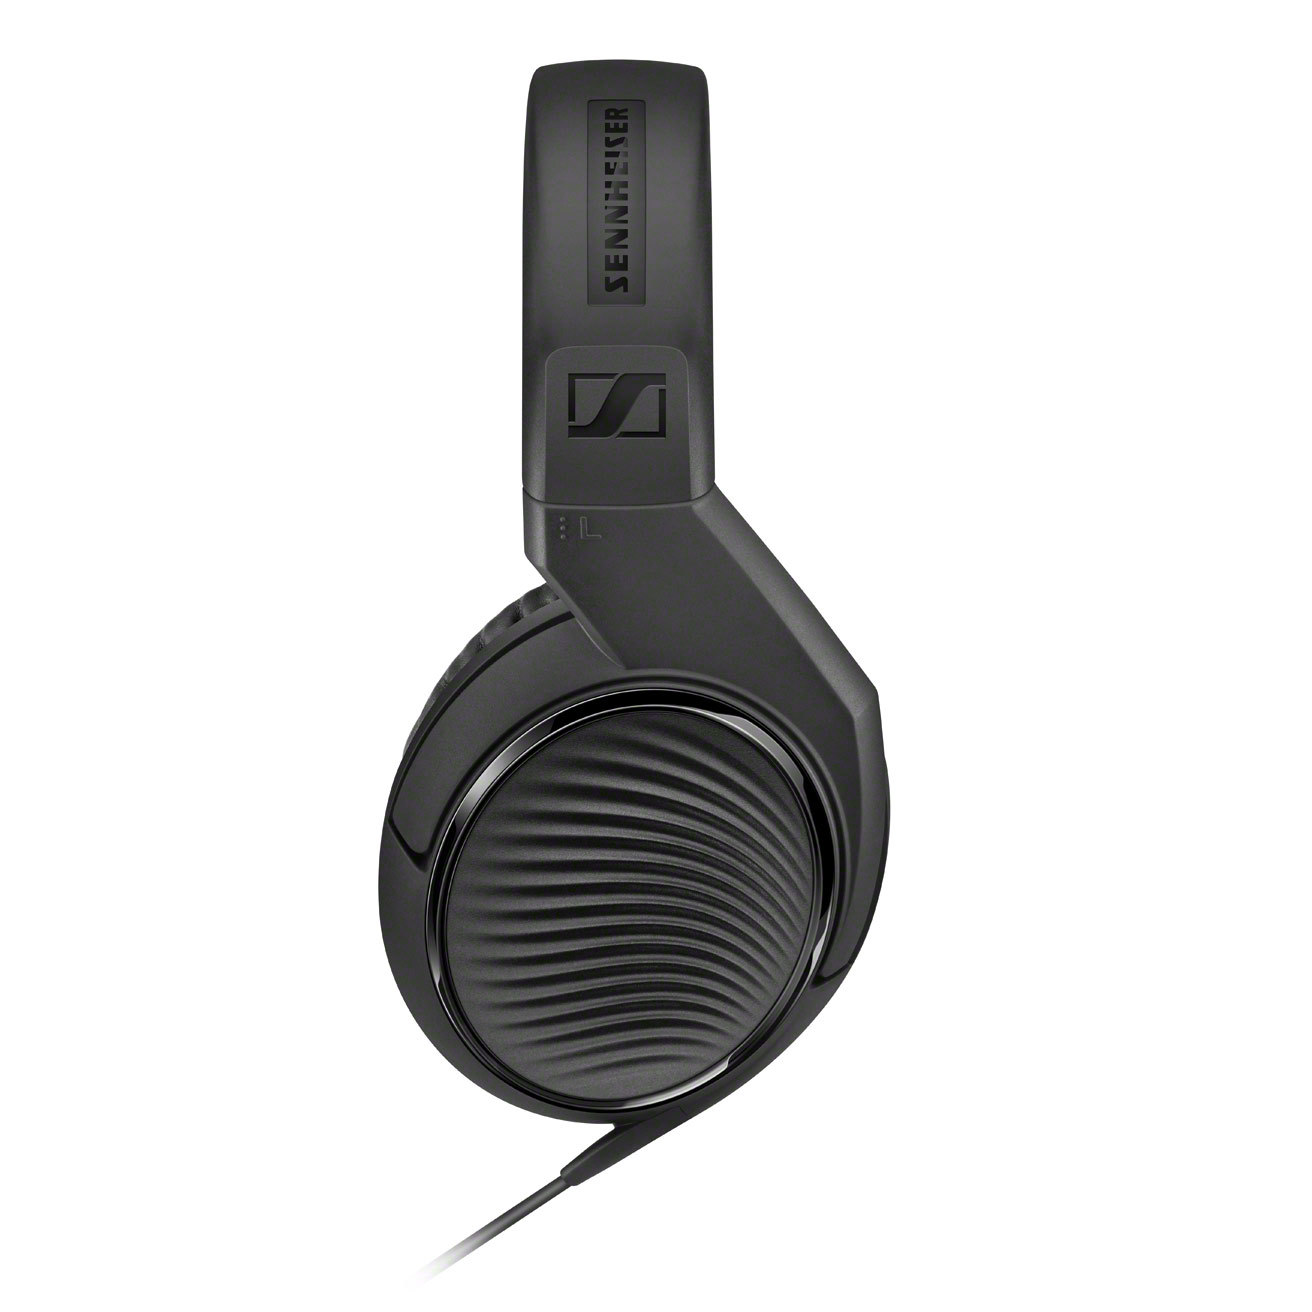 Sennheiser Hd200 Pro - Closed headset - Variation 1